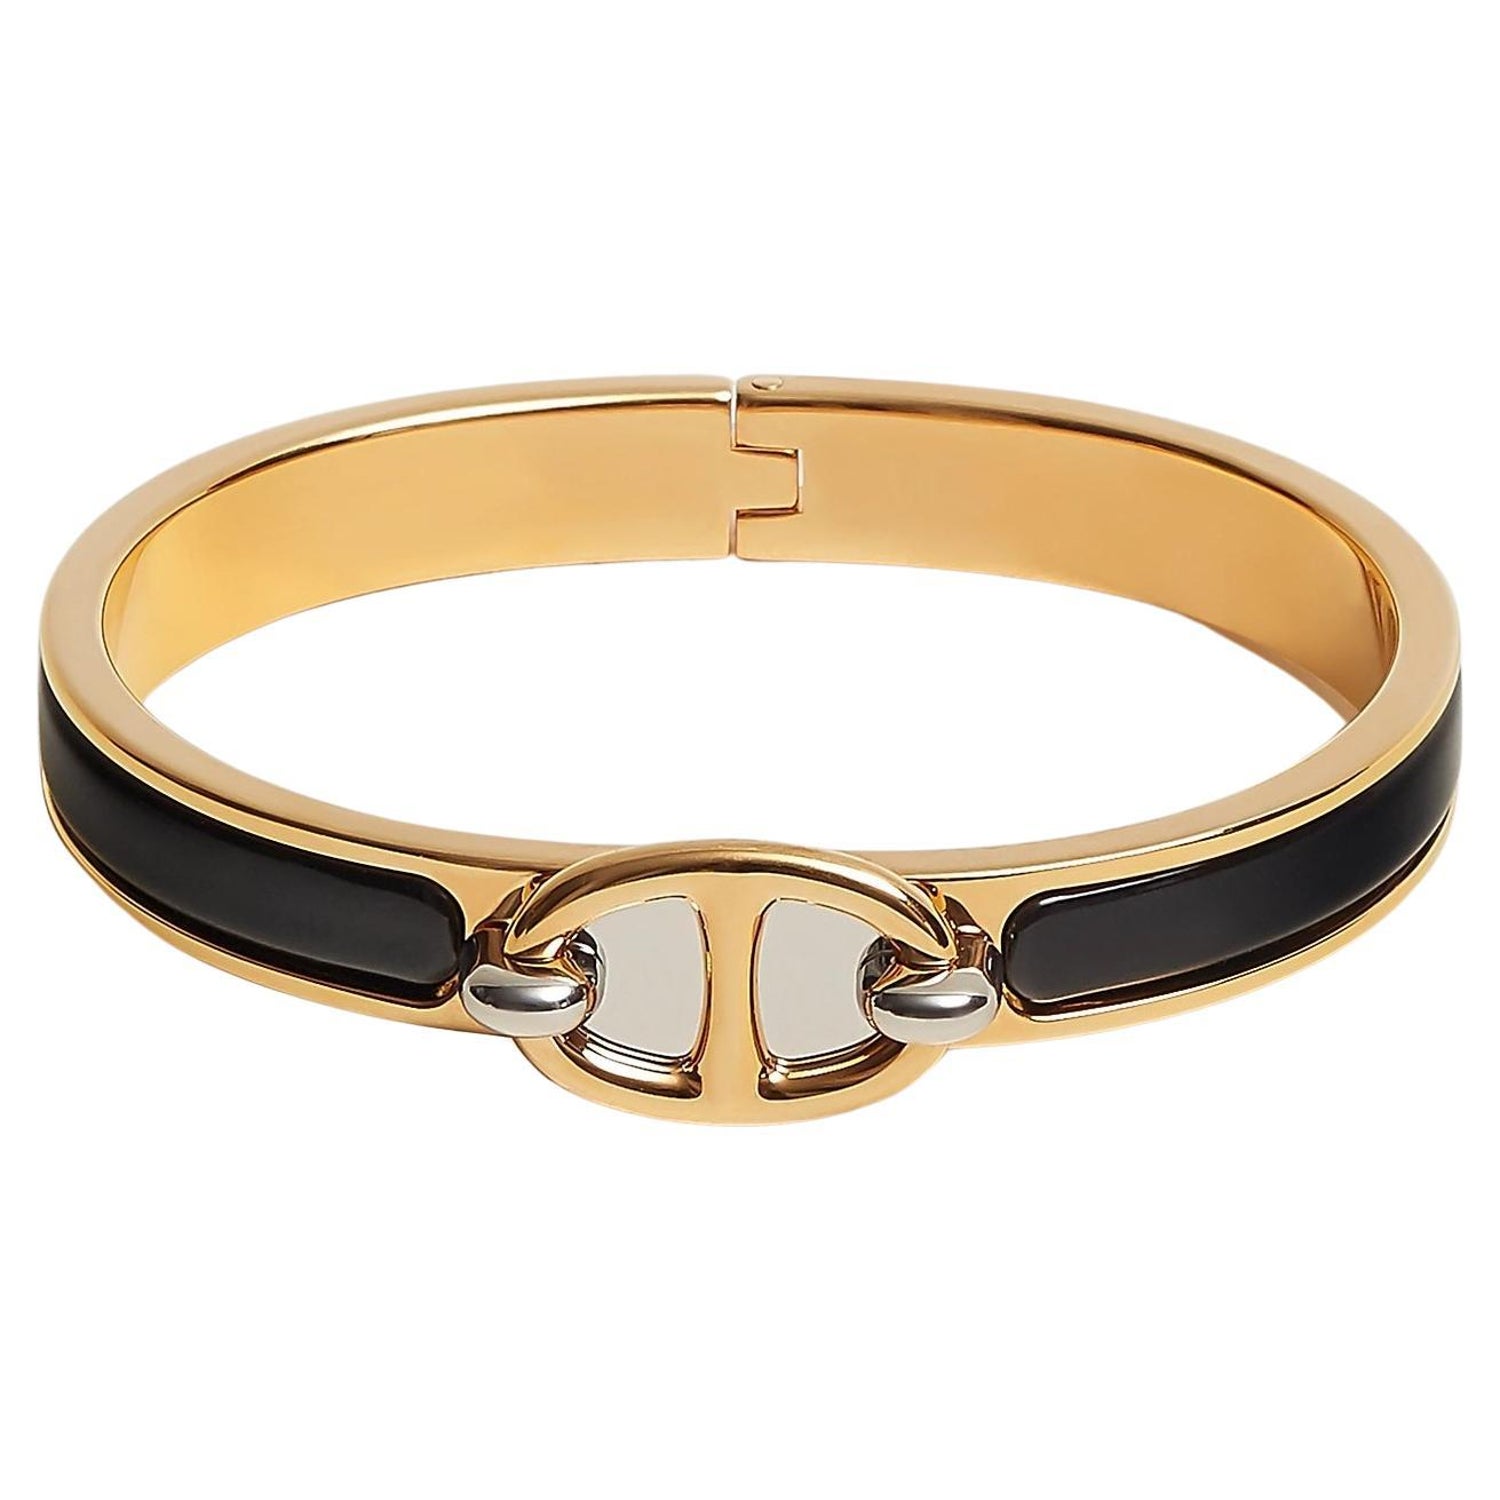 Louis Vuitton Nanogram Strass Bracelet Gold Metal & Swarovski Elements1. Size M